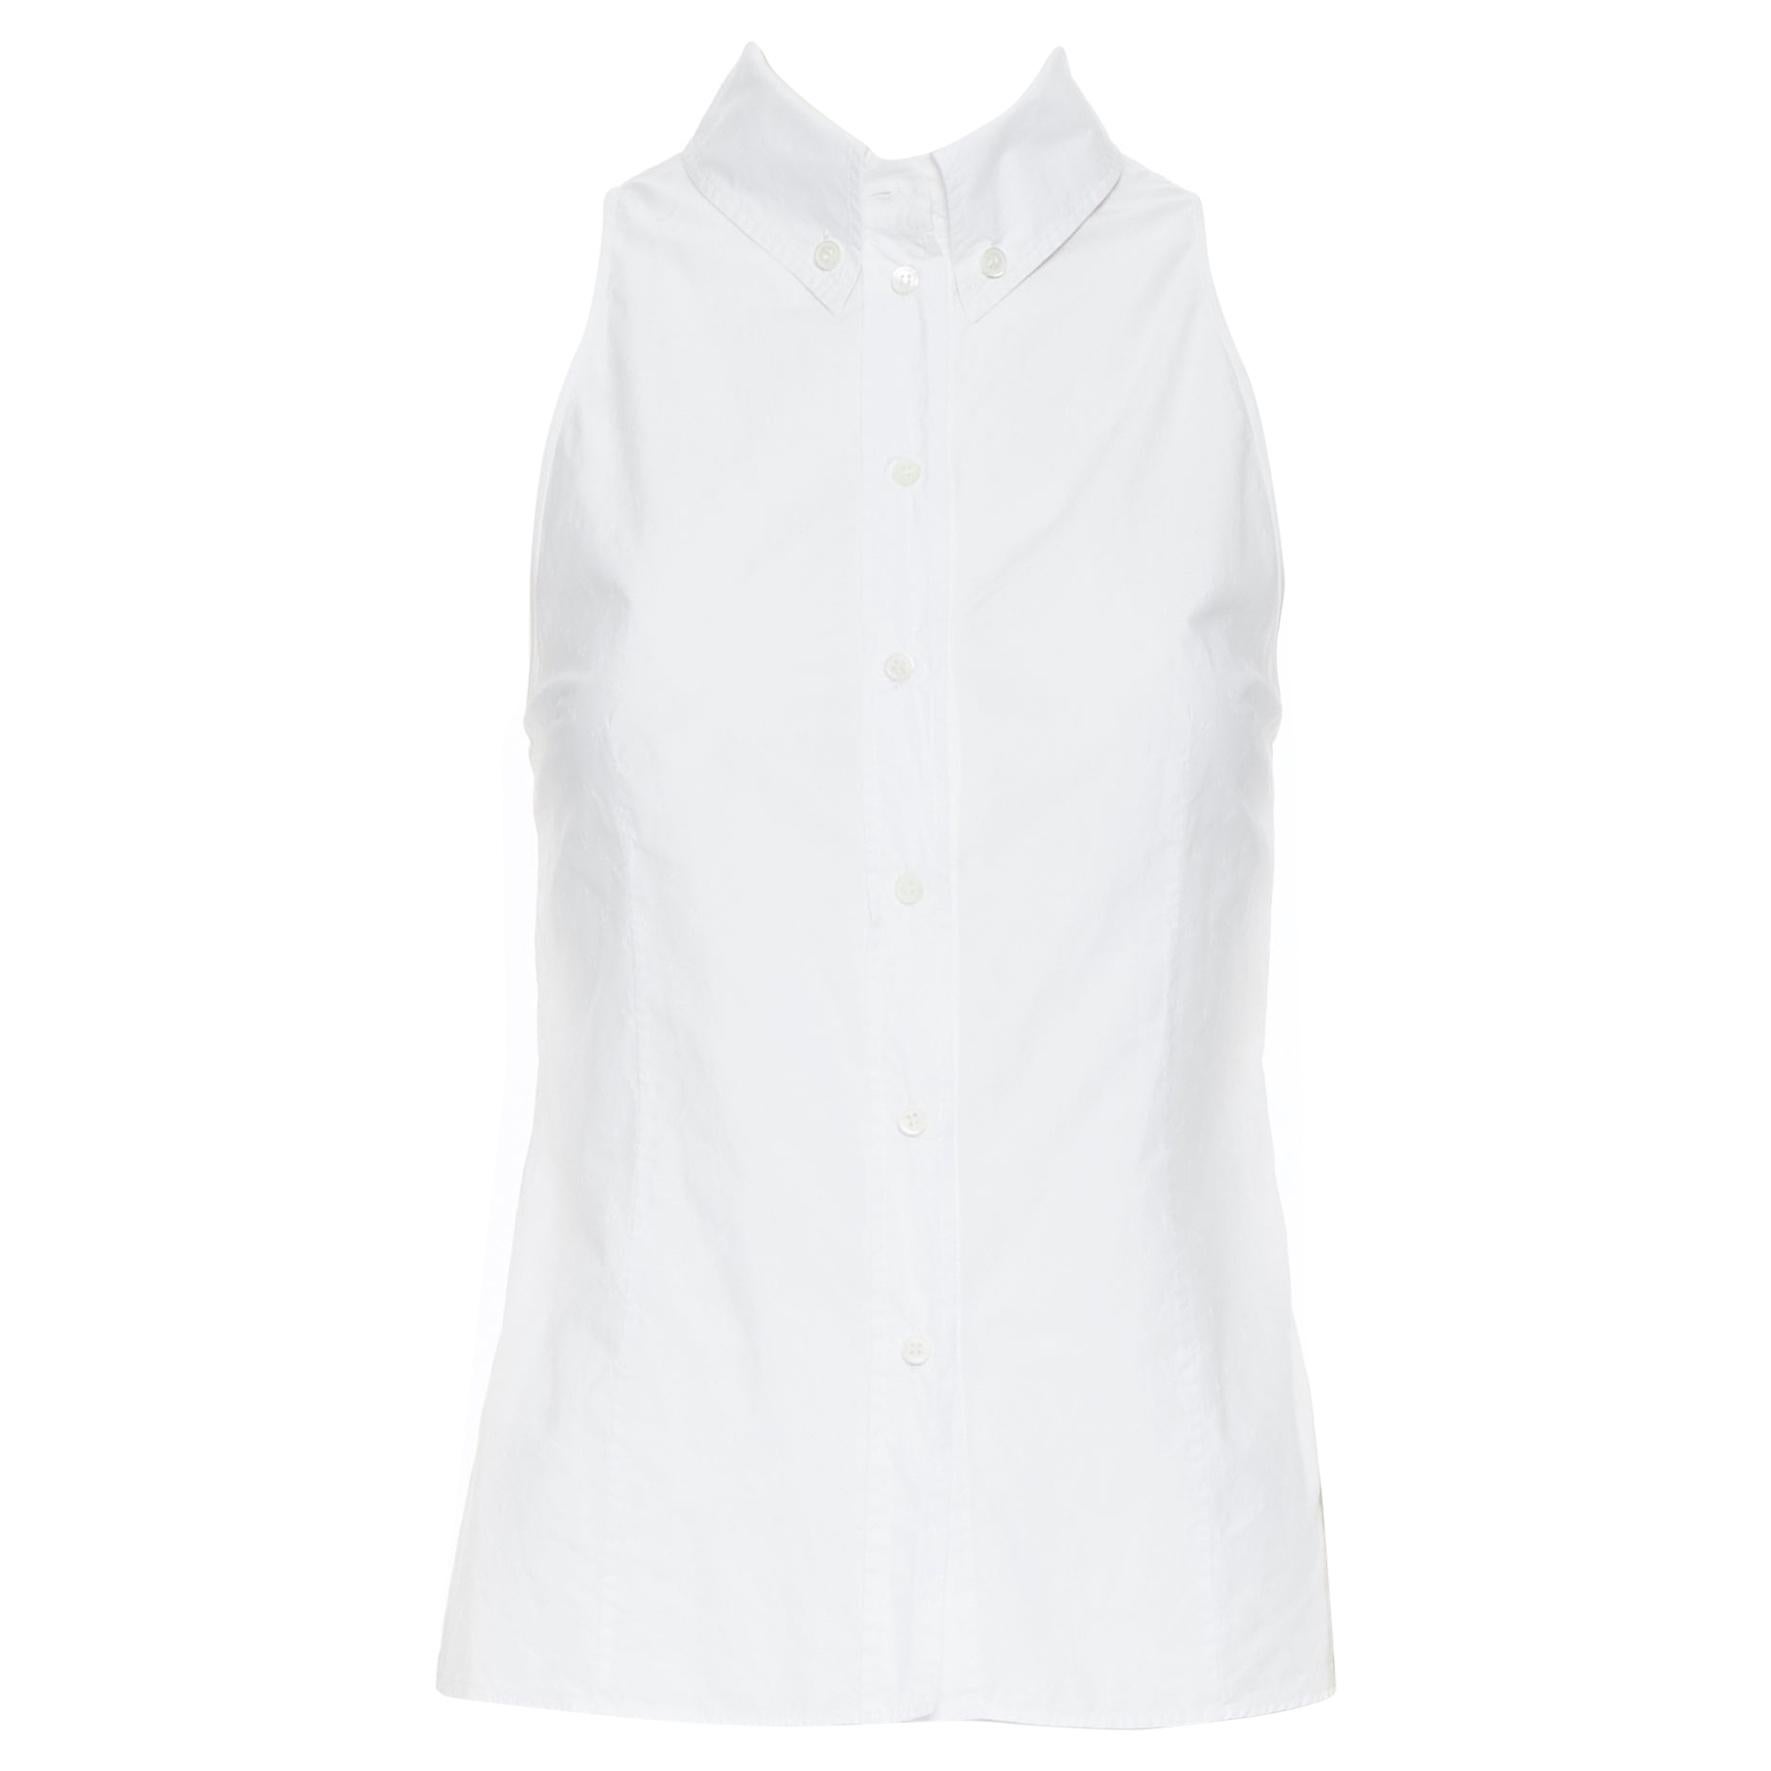 JIL SANDER NAVY white cotton sailor anchor embroidered sleeveless shirt  FR34 XS